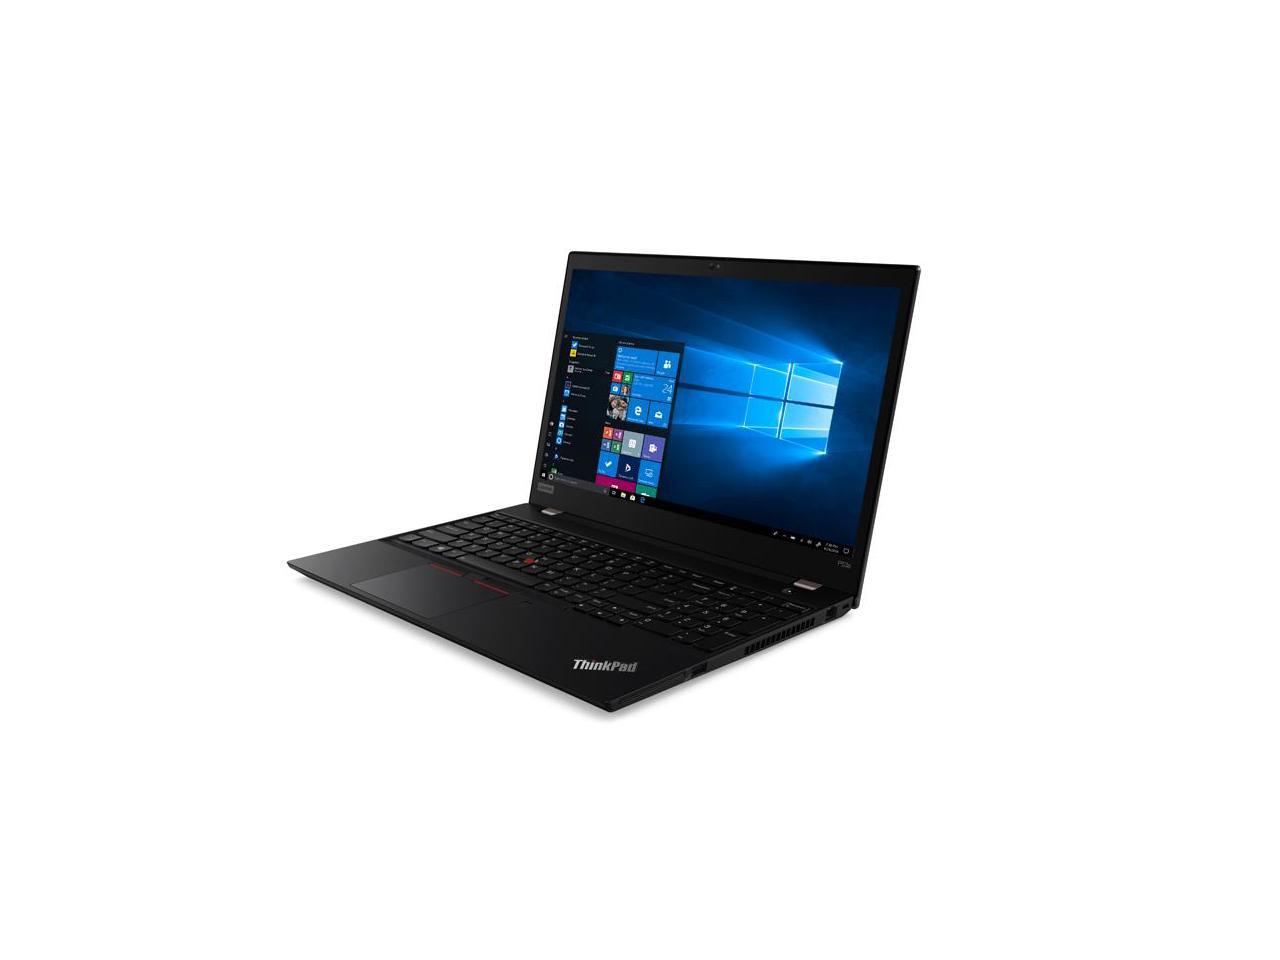 Lenovo ThinkPad P53s Home and Business Laptop (Intel i7-8565U 4 